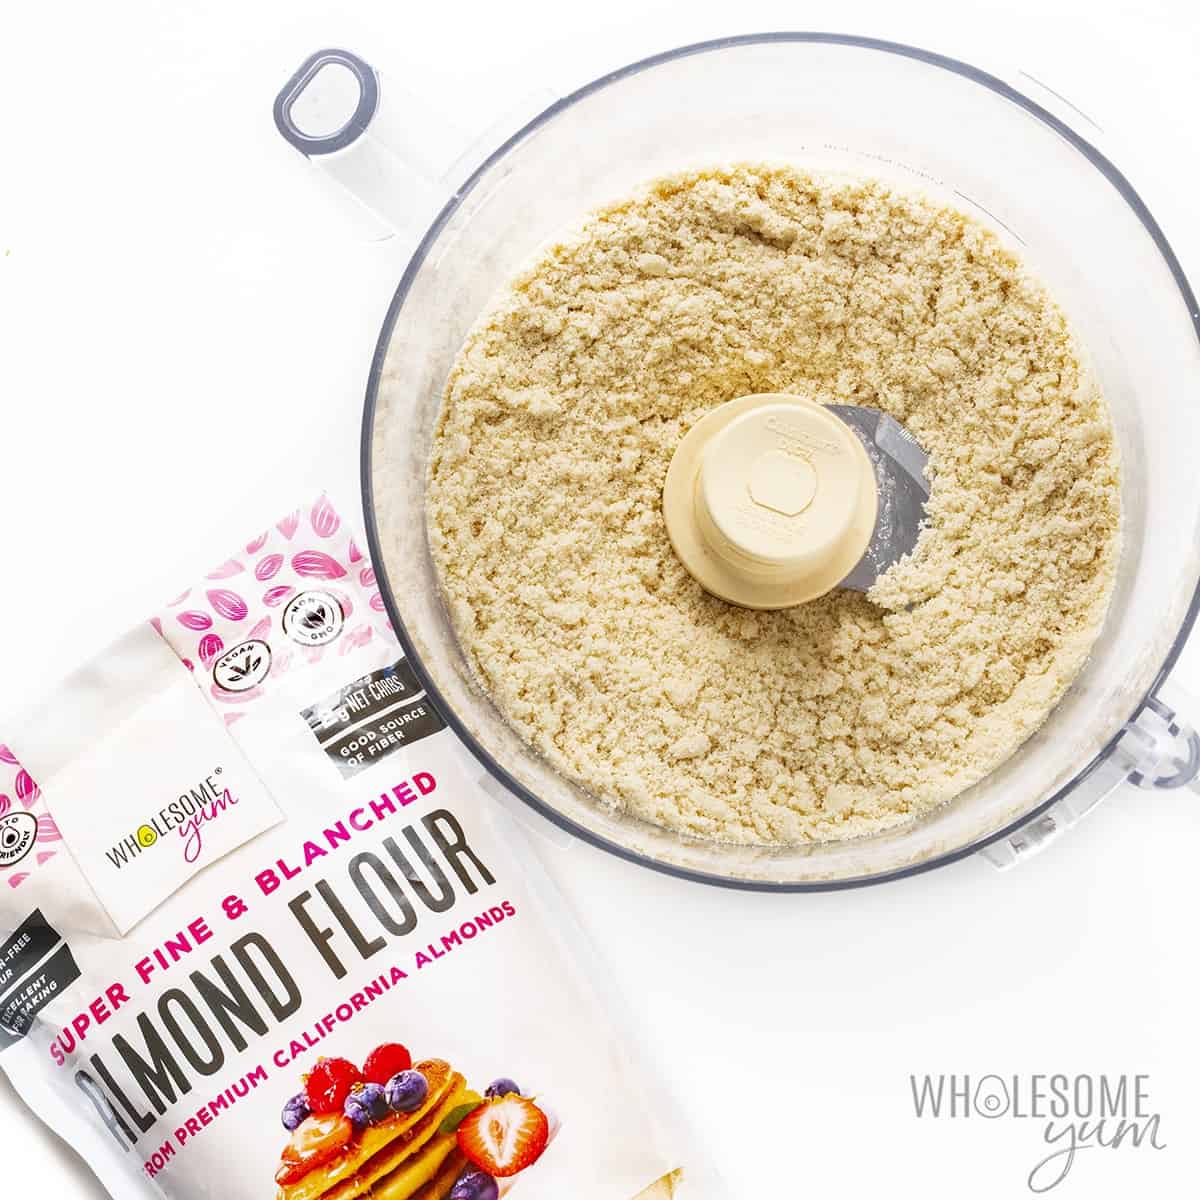 Almond flour tortillas dry ingredients in a food processor.